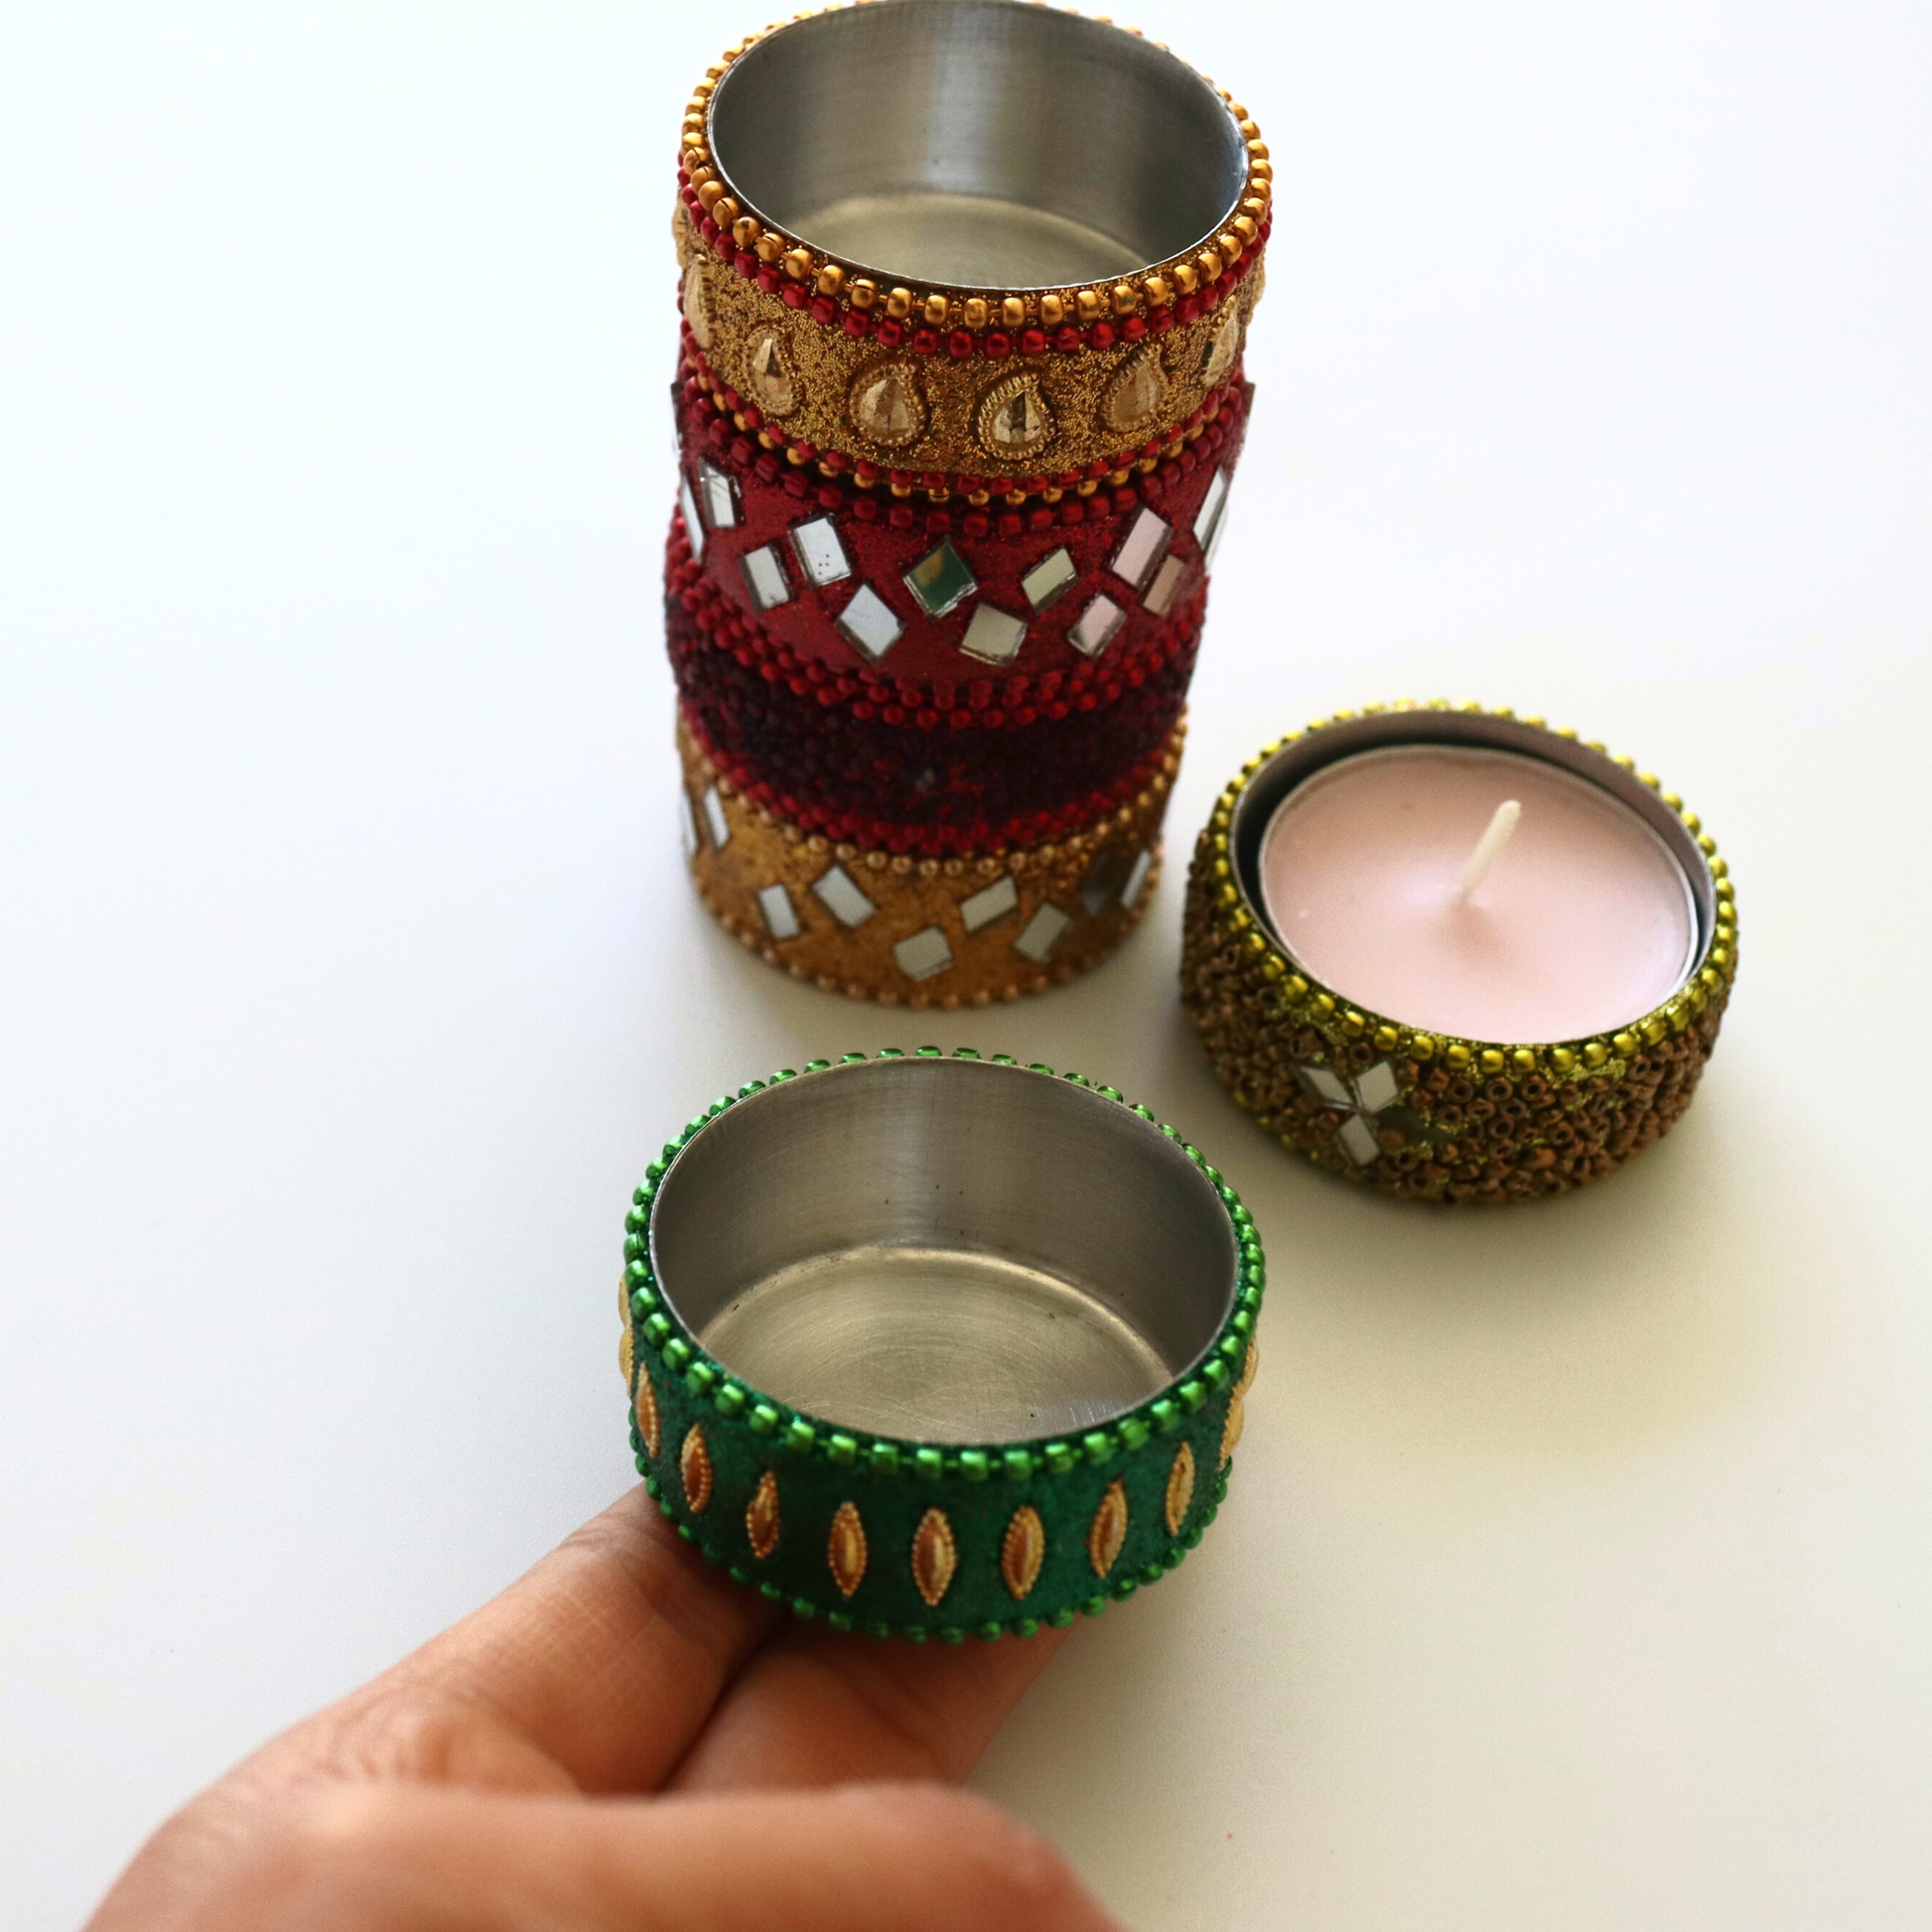 Handmade Decorative Tea Light Holders - Set of 6, Colourful, Vibrant